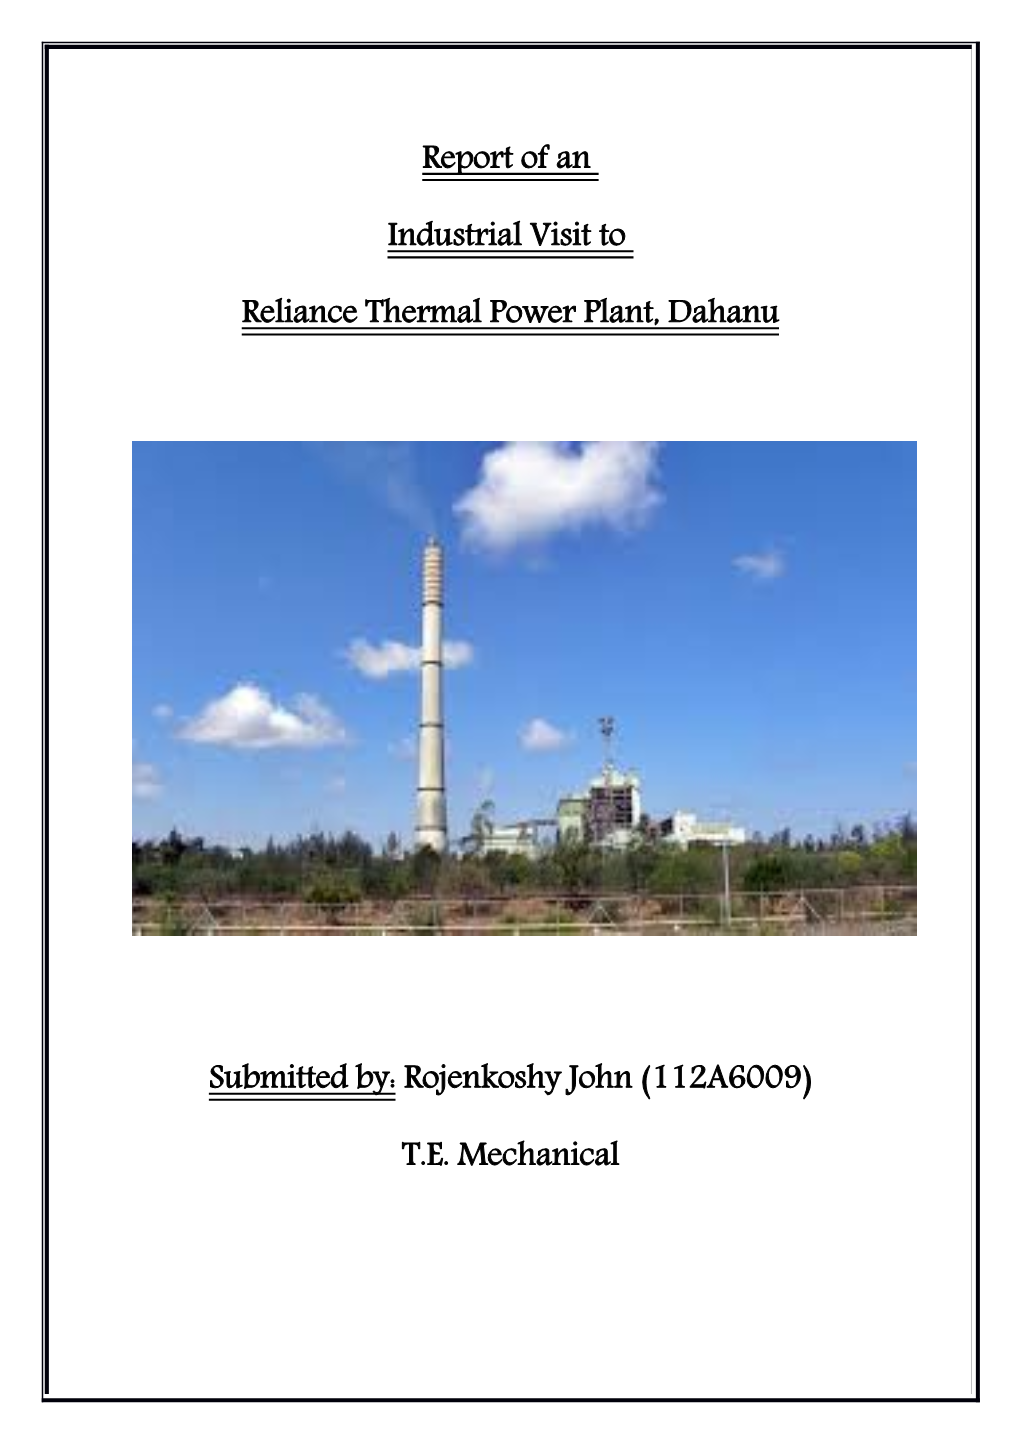 Dahanu Thermal Power Plant IV Report